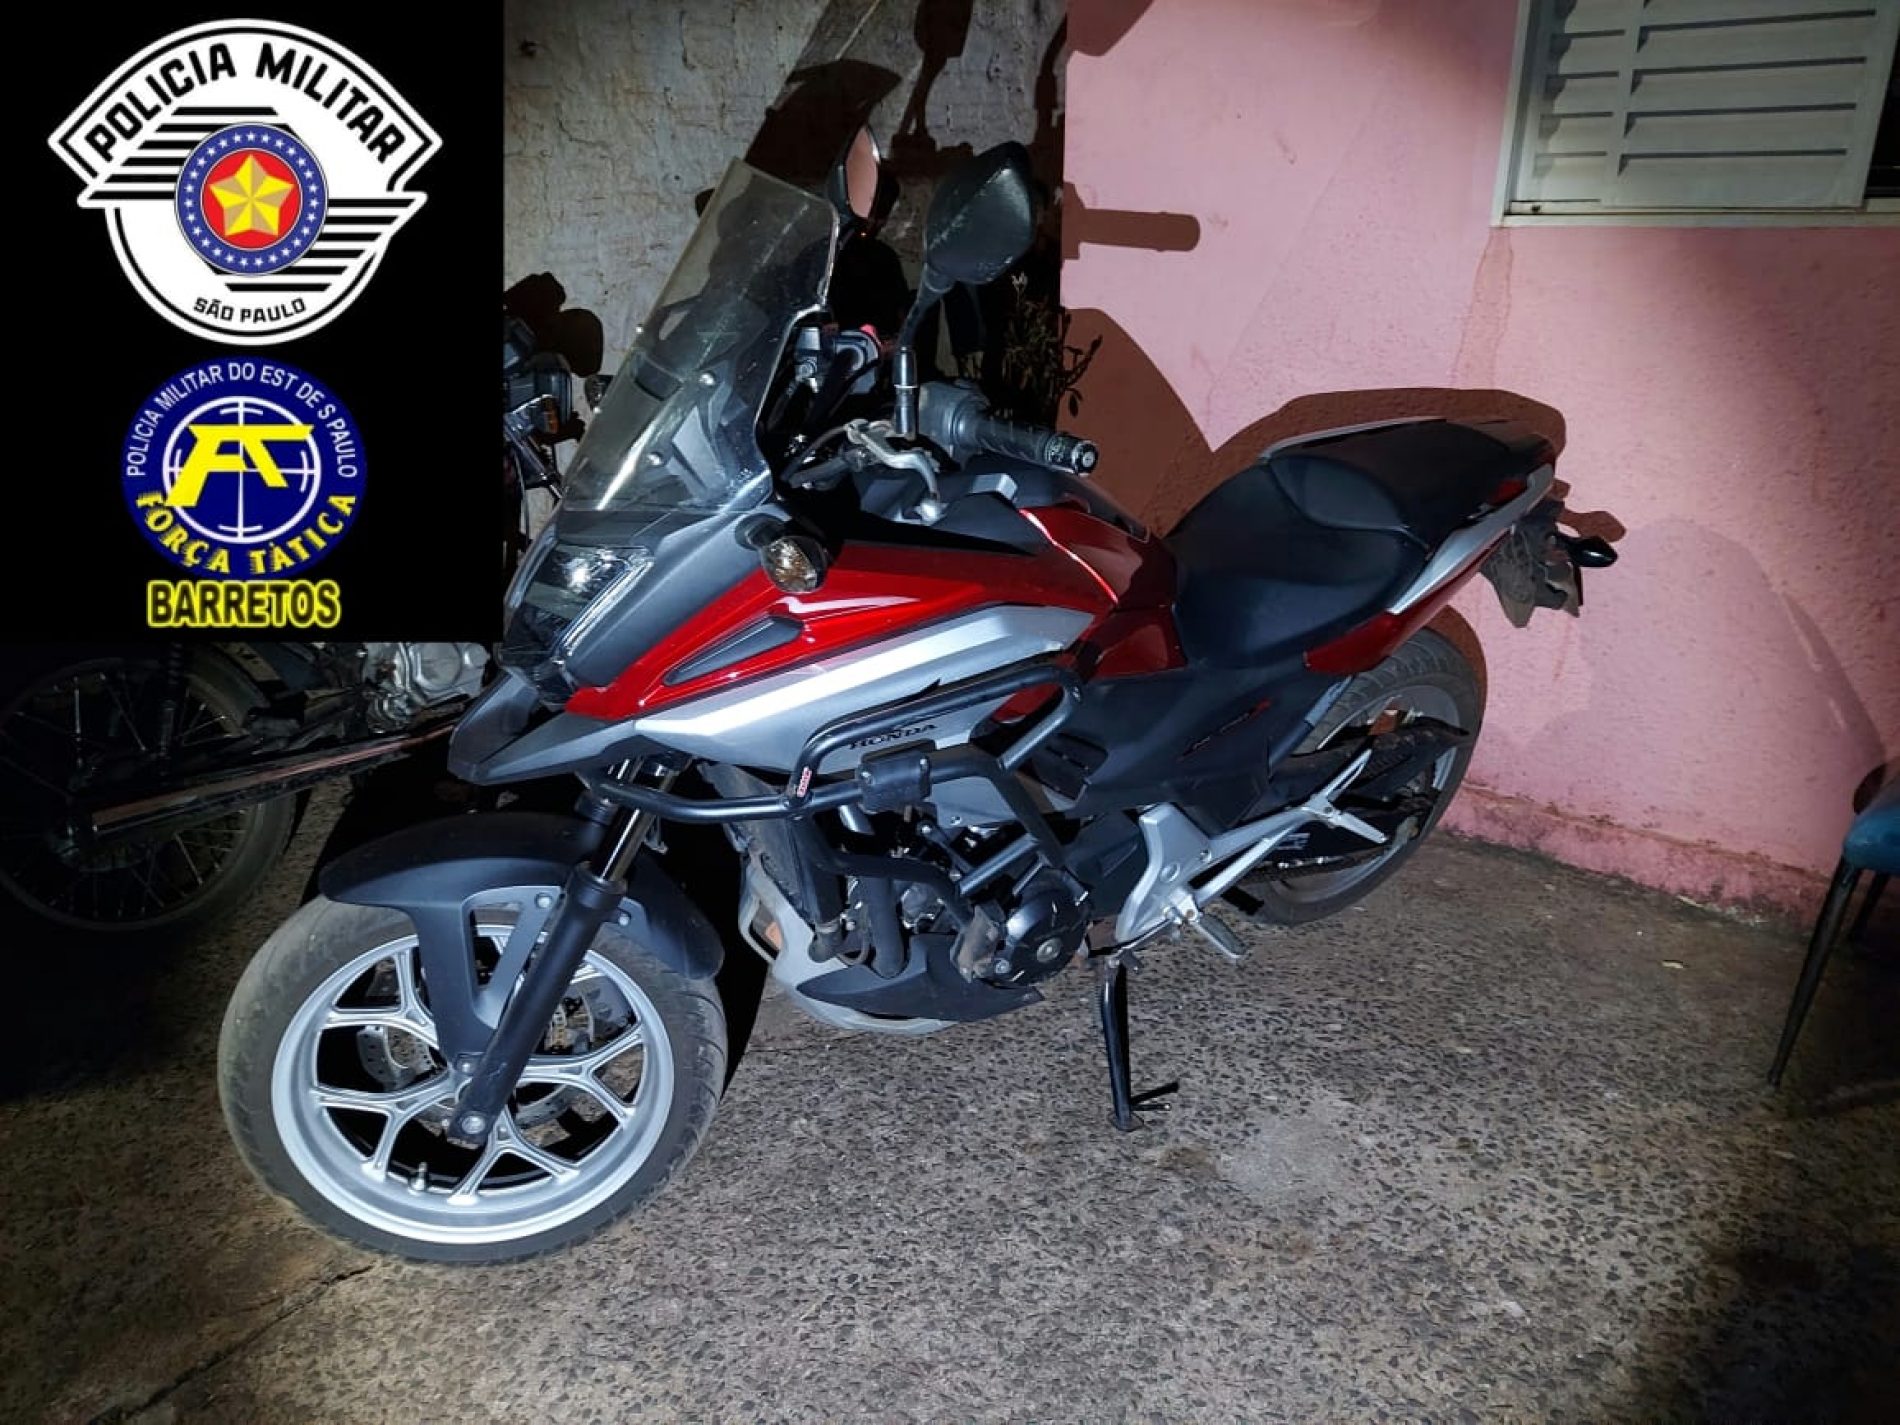 BARRETOS: Polícia Militar recupera moto que havia sido roubada na Avenida Roberto Rios